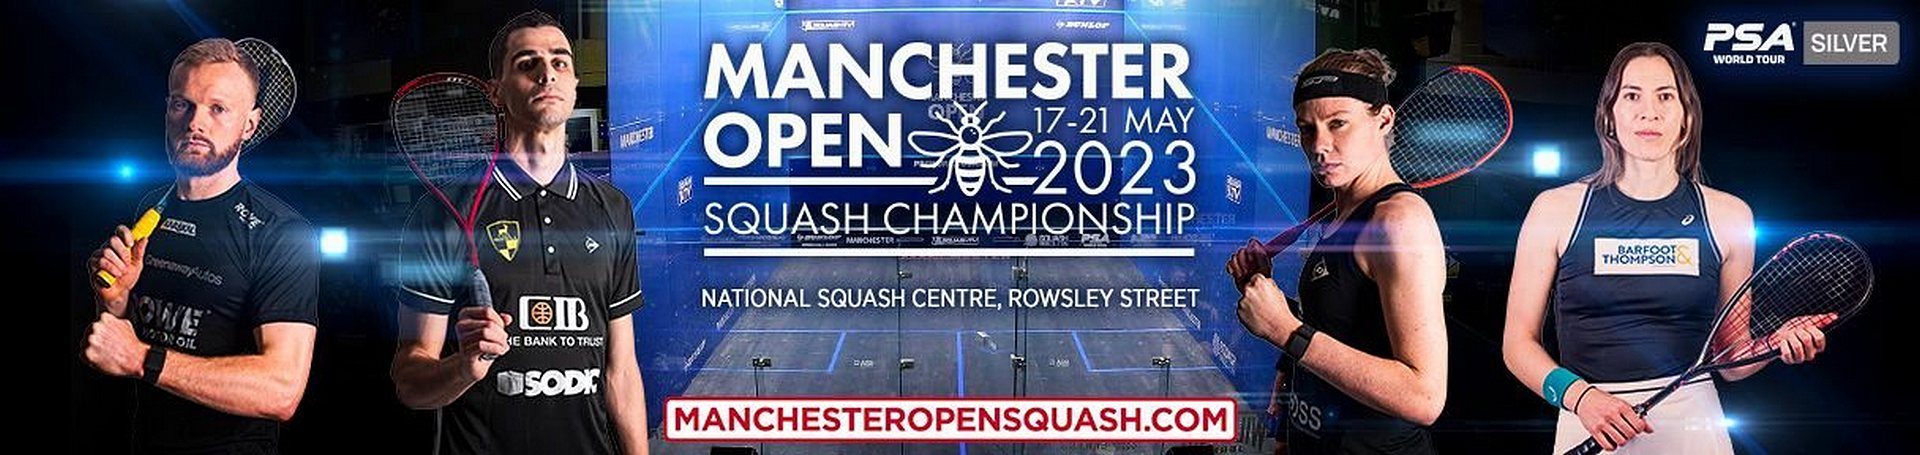 Manchester Open Squash 